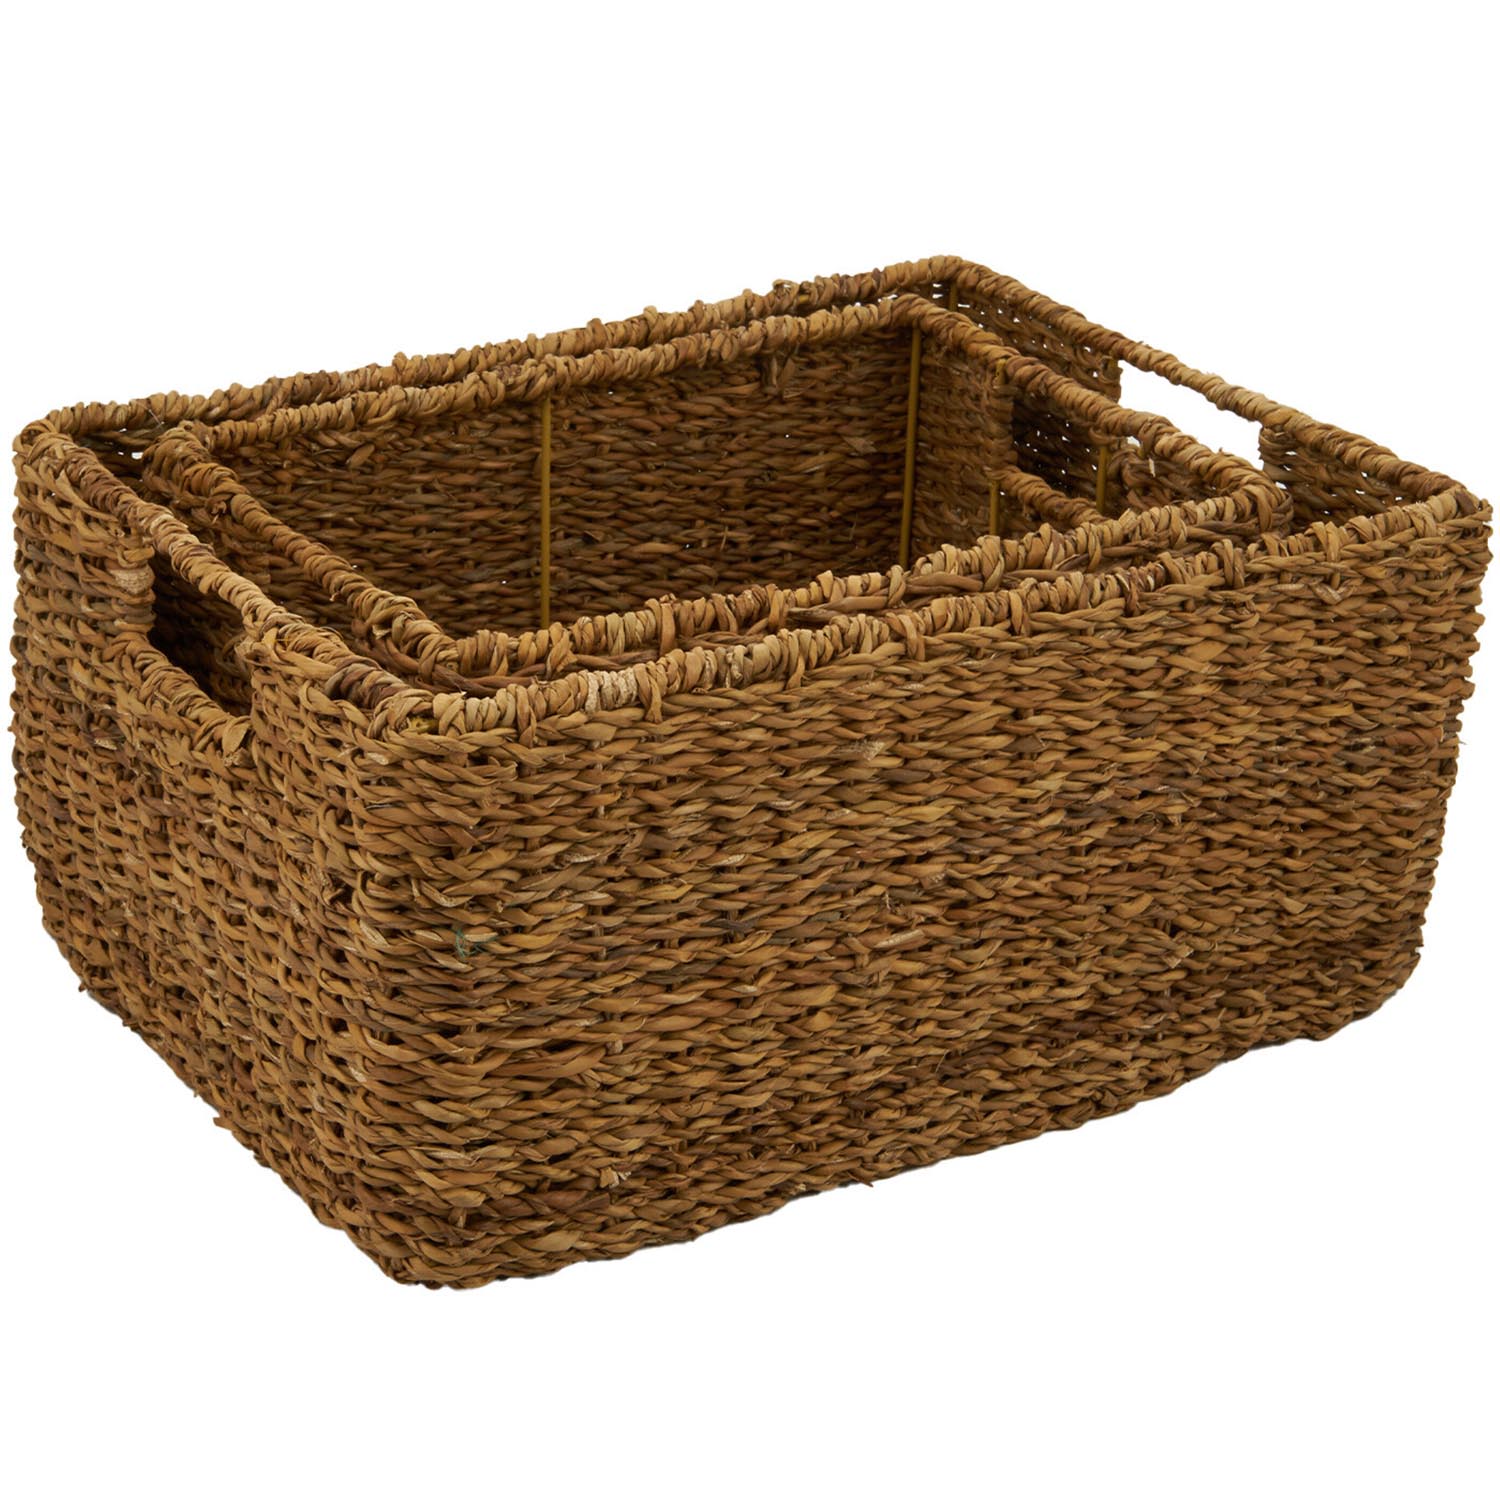 Set of 2 Sea Grass Storage Baskets - Brown Image 1